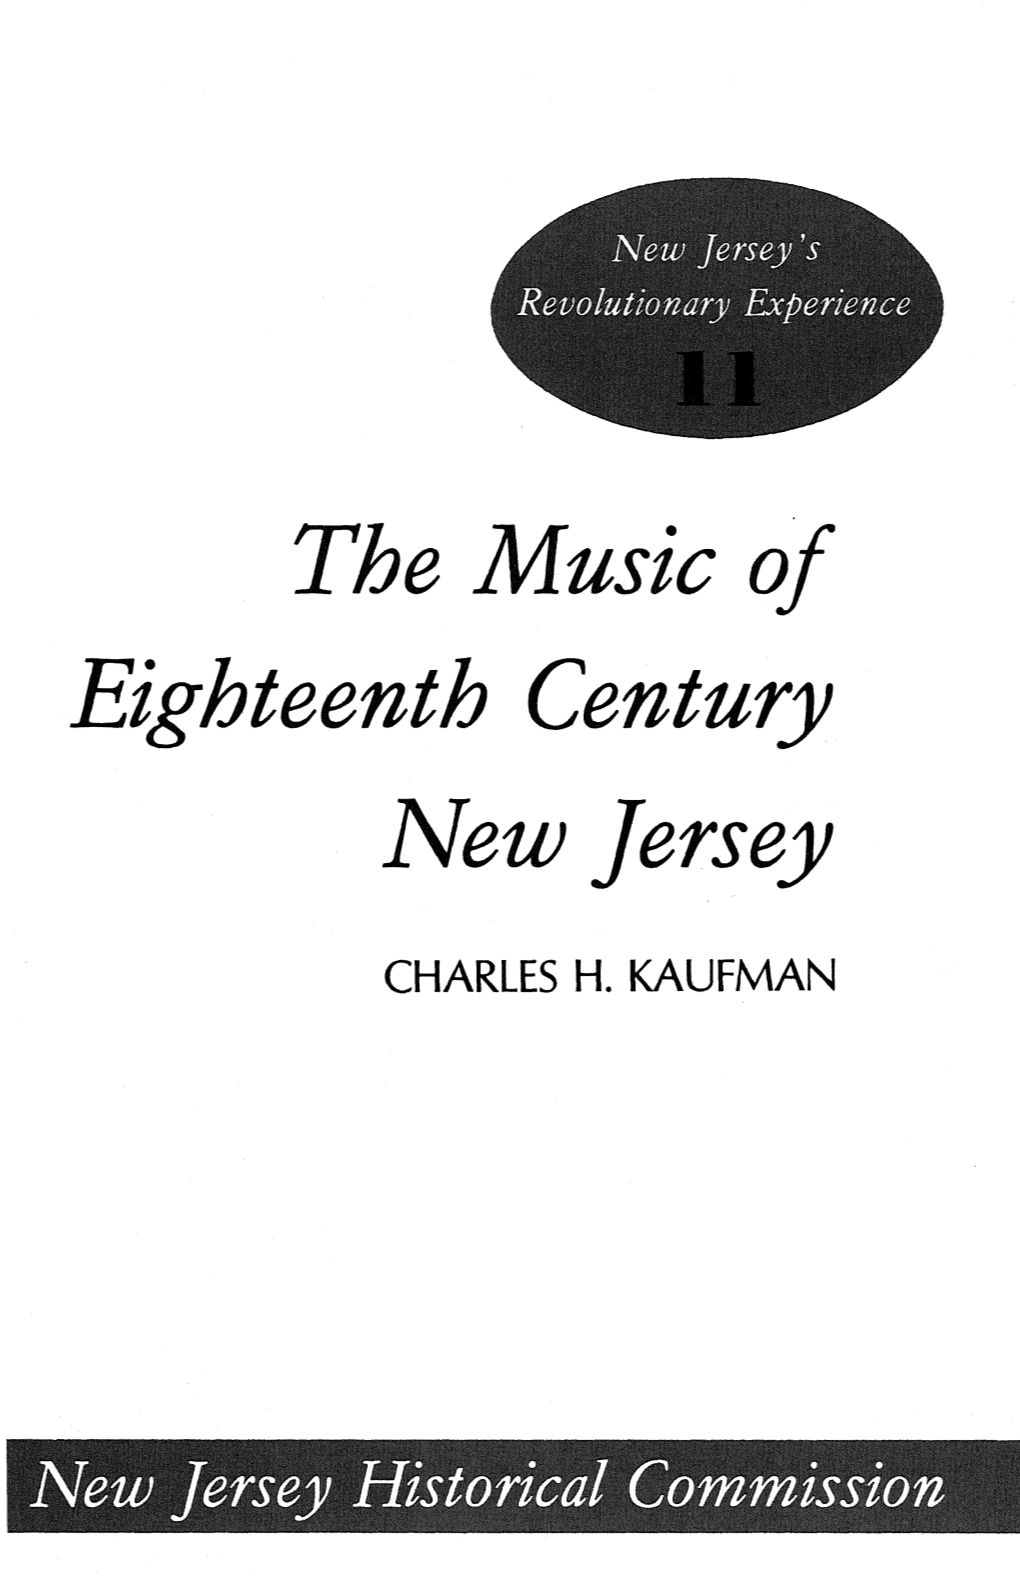 The Music of L!.Ighteenth Century New Jersey